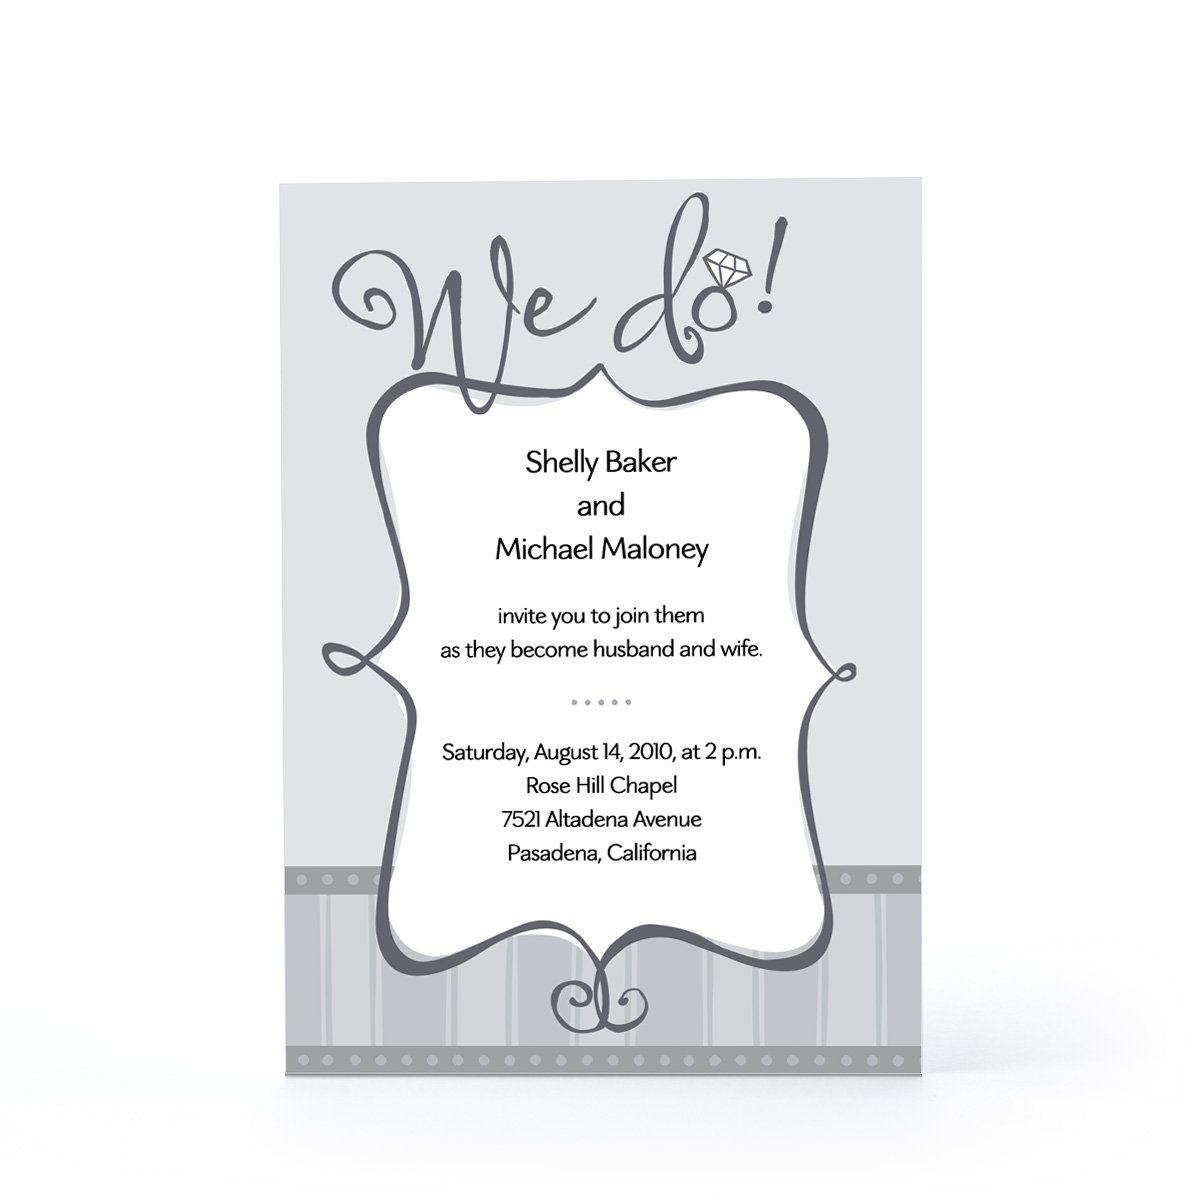 Hallmark Printable Invitations Invitation Design Blog